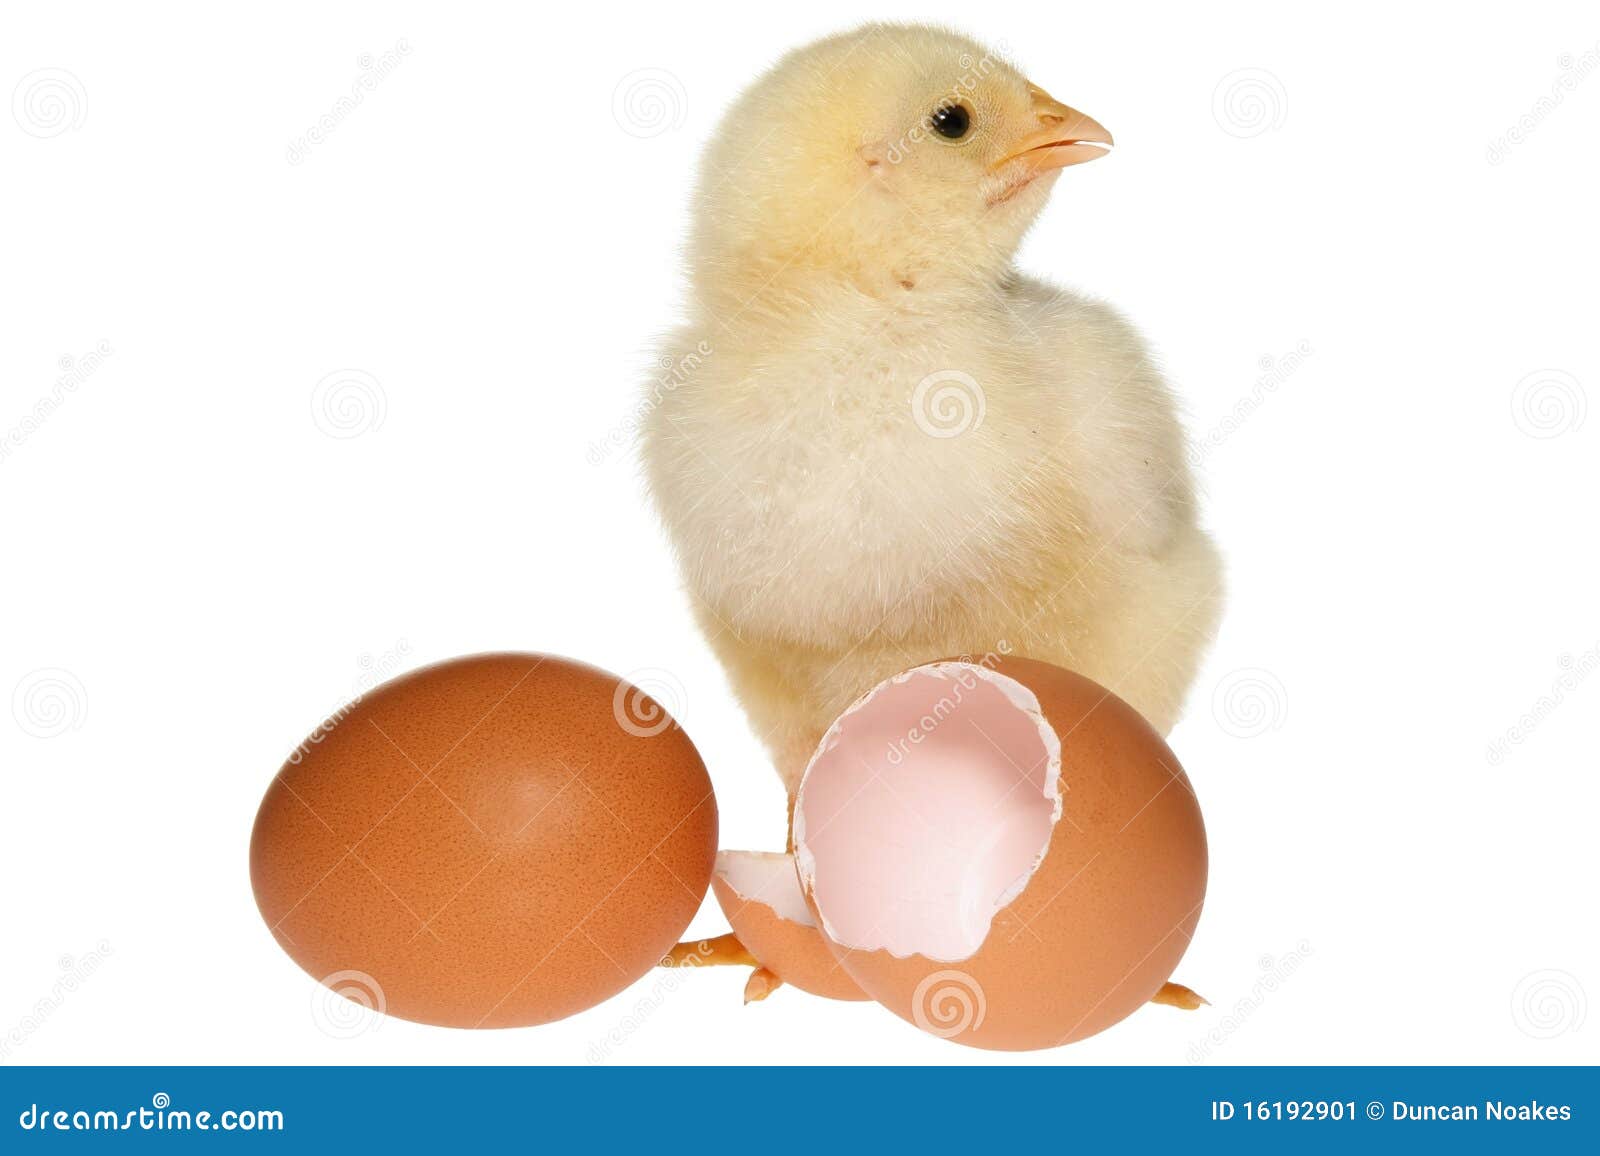 Fluffy yellow baby chicken standing next to a broken open egg shell.